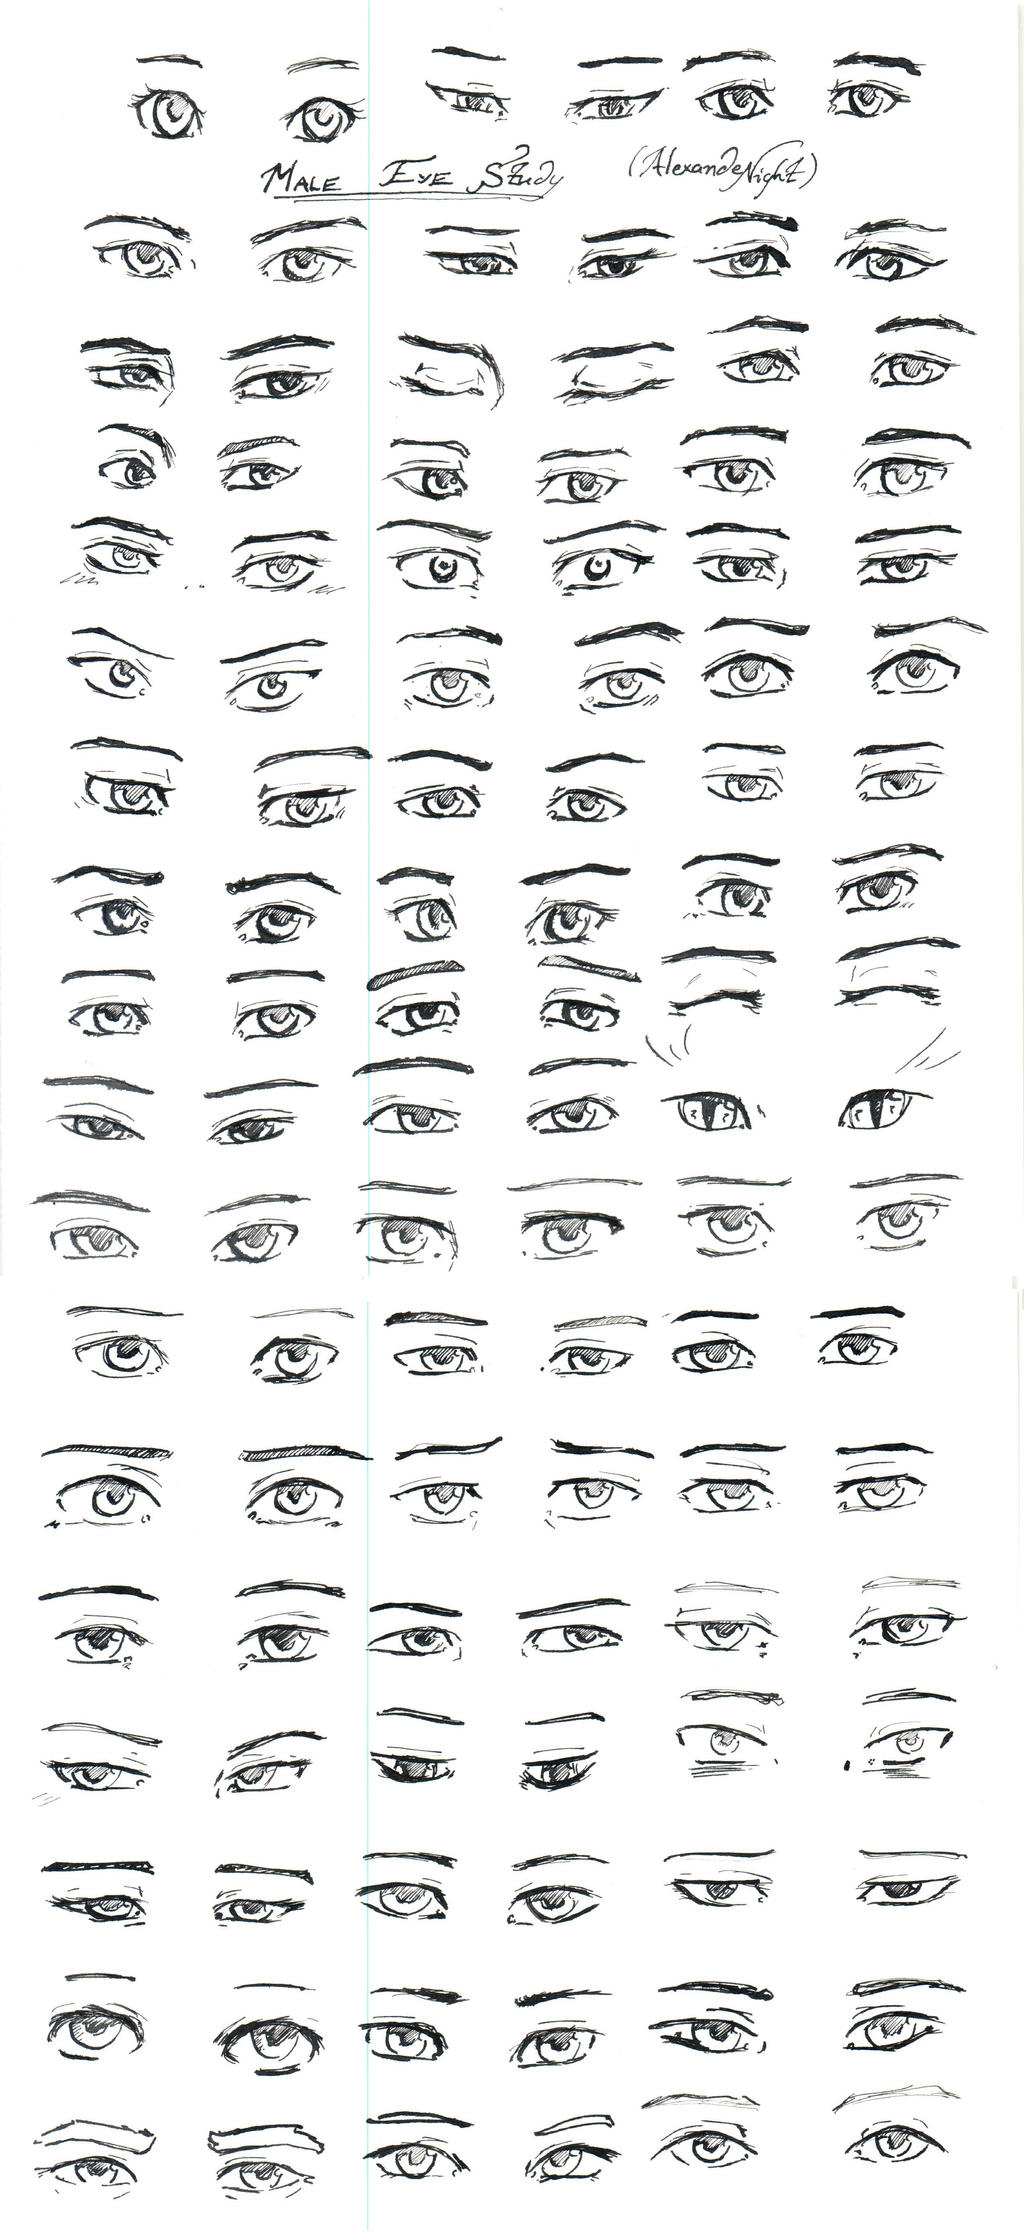 Male anime eye study